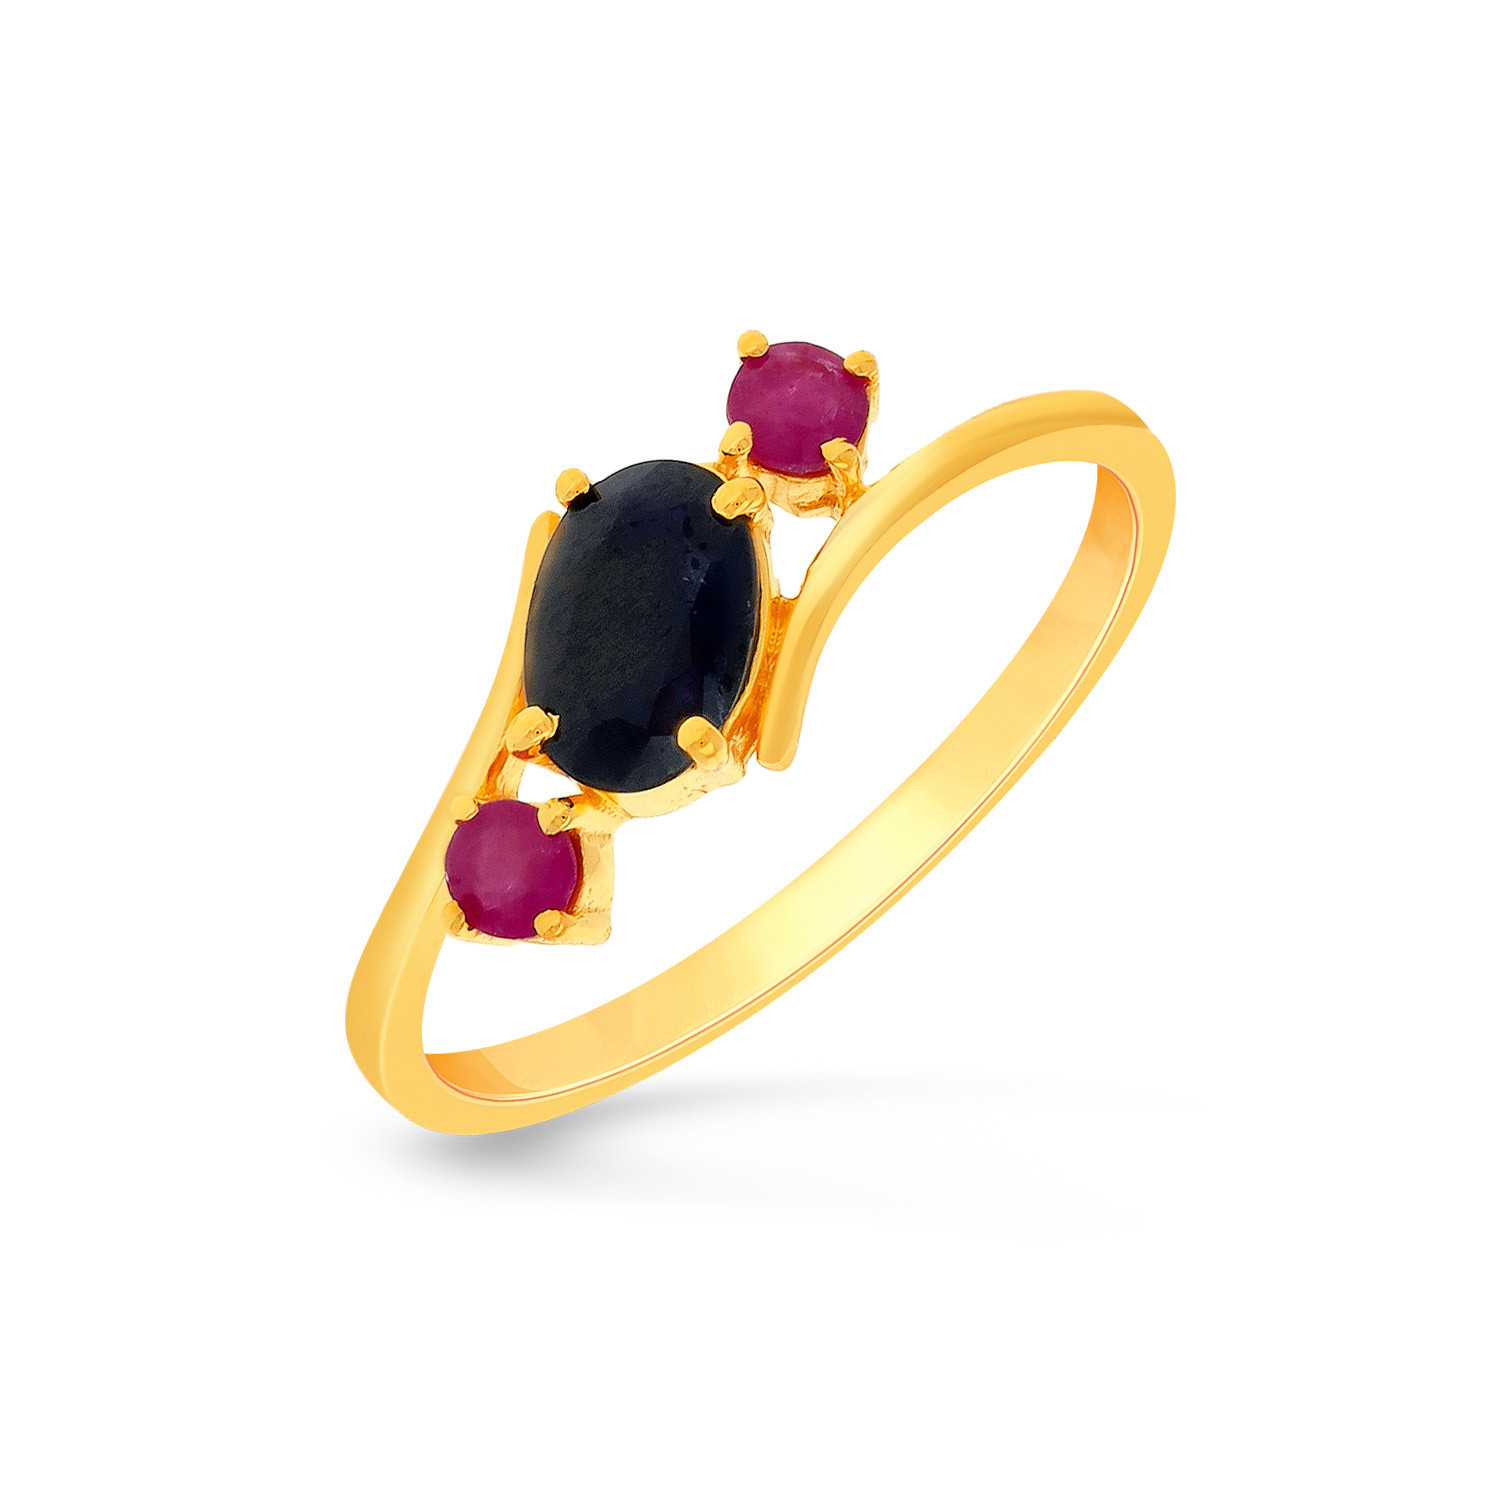 Malabar Gold and Diamonds 22k (916) Yellow Gold Ring for Women : Amazon.in:  Fashion